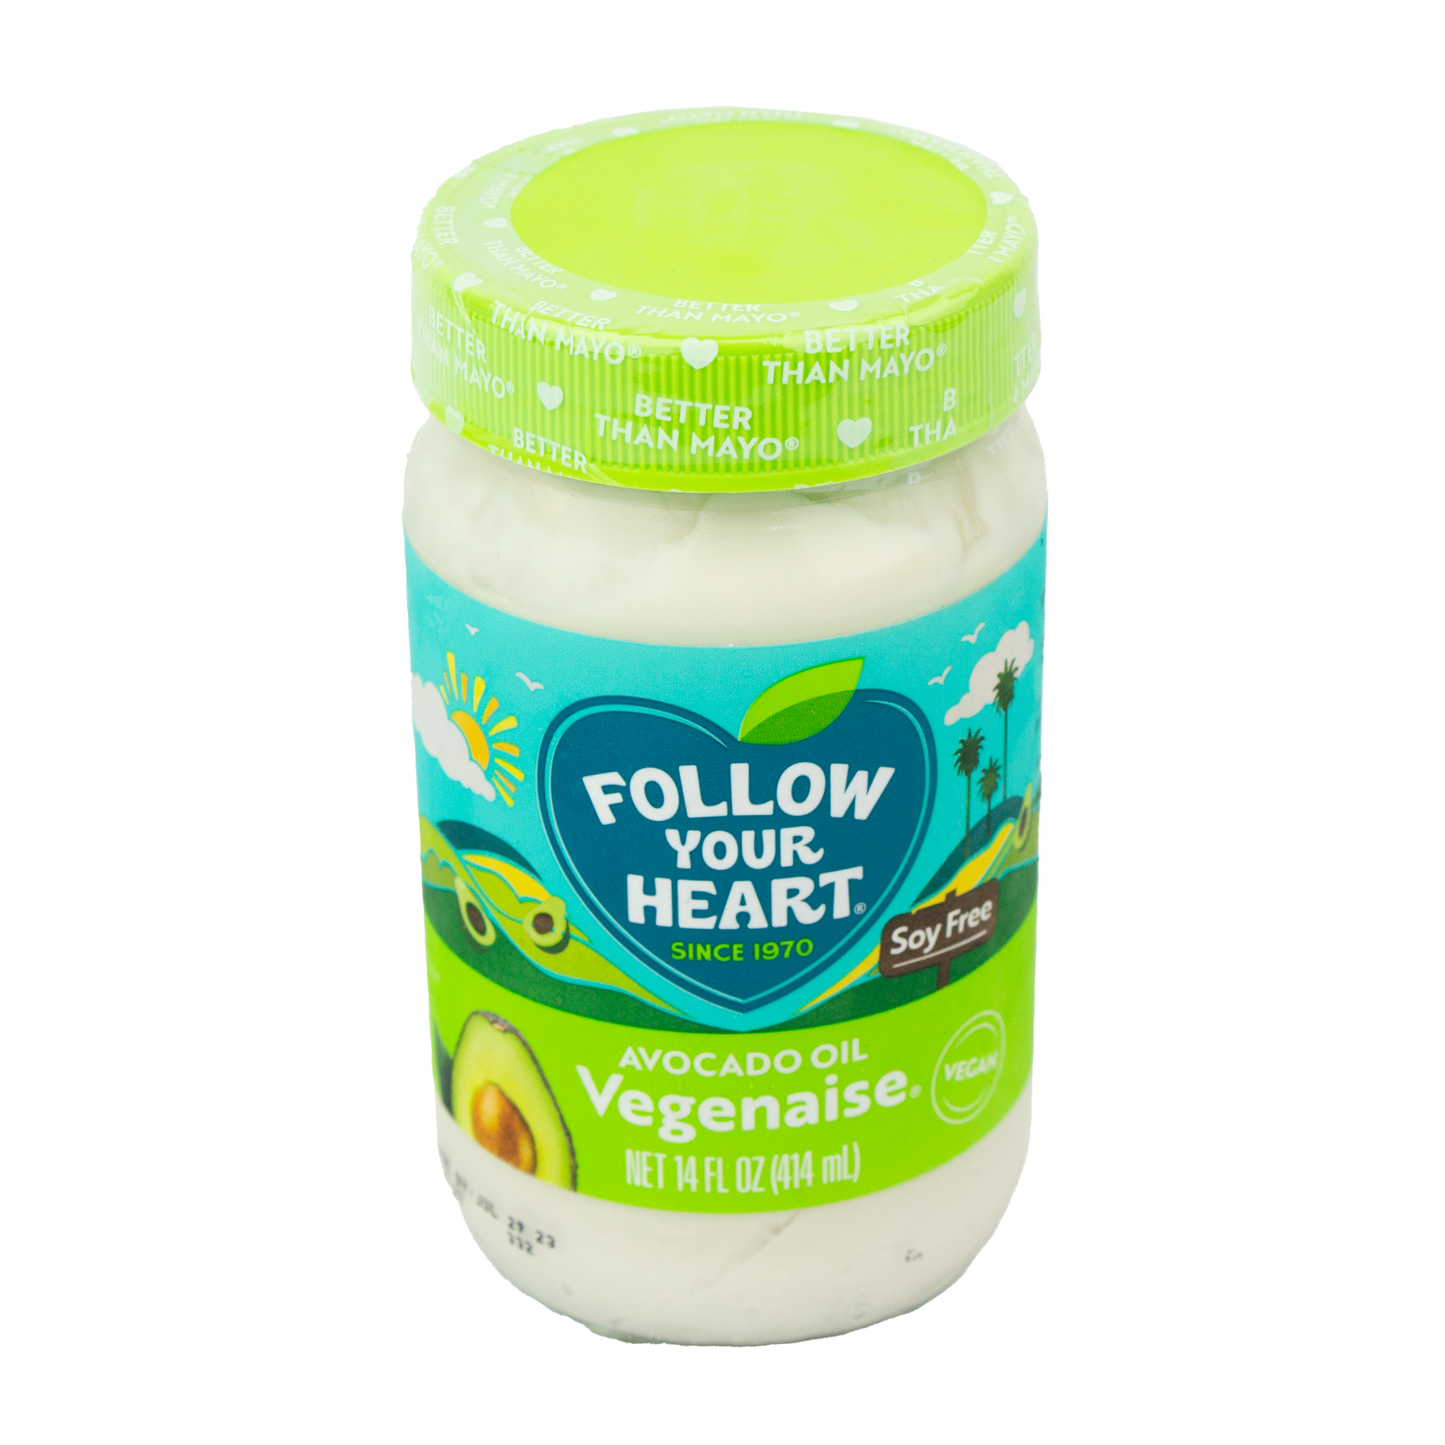 Follow Your Heart - Vegenaise Avocado Oil (14 oz.) (Store Pick-Up Only)